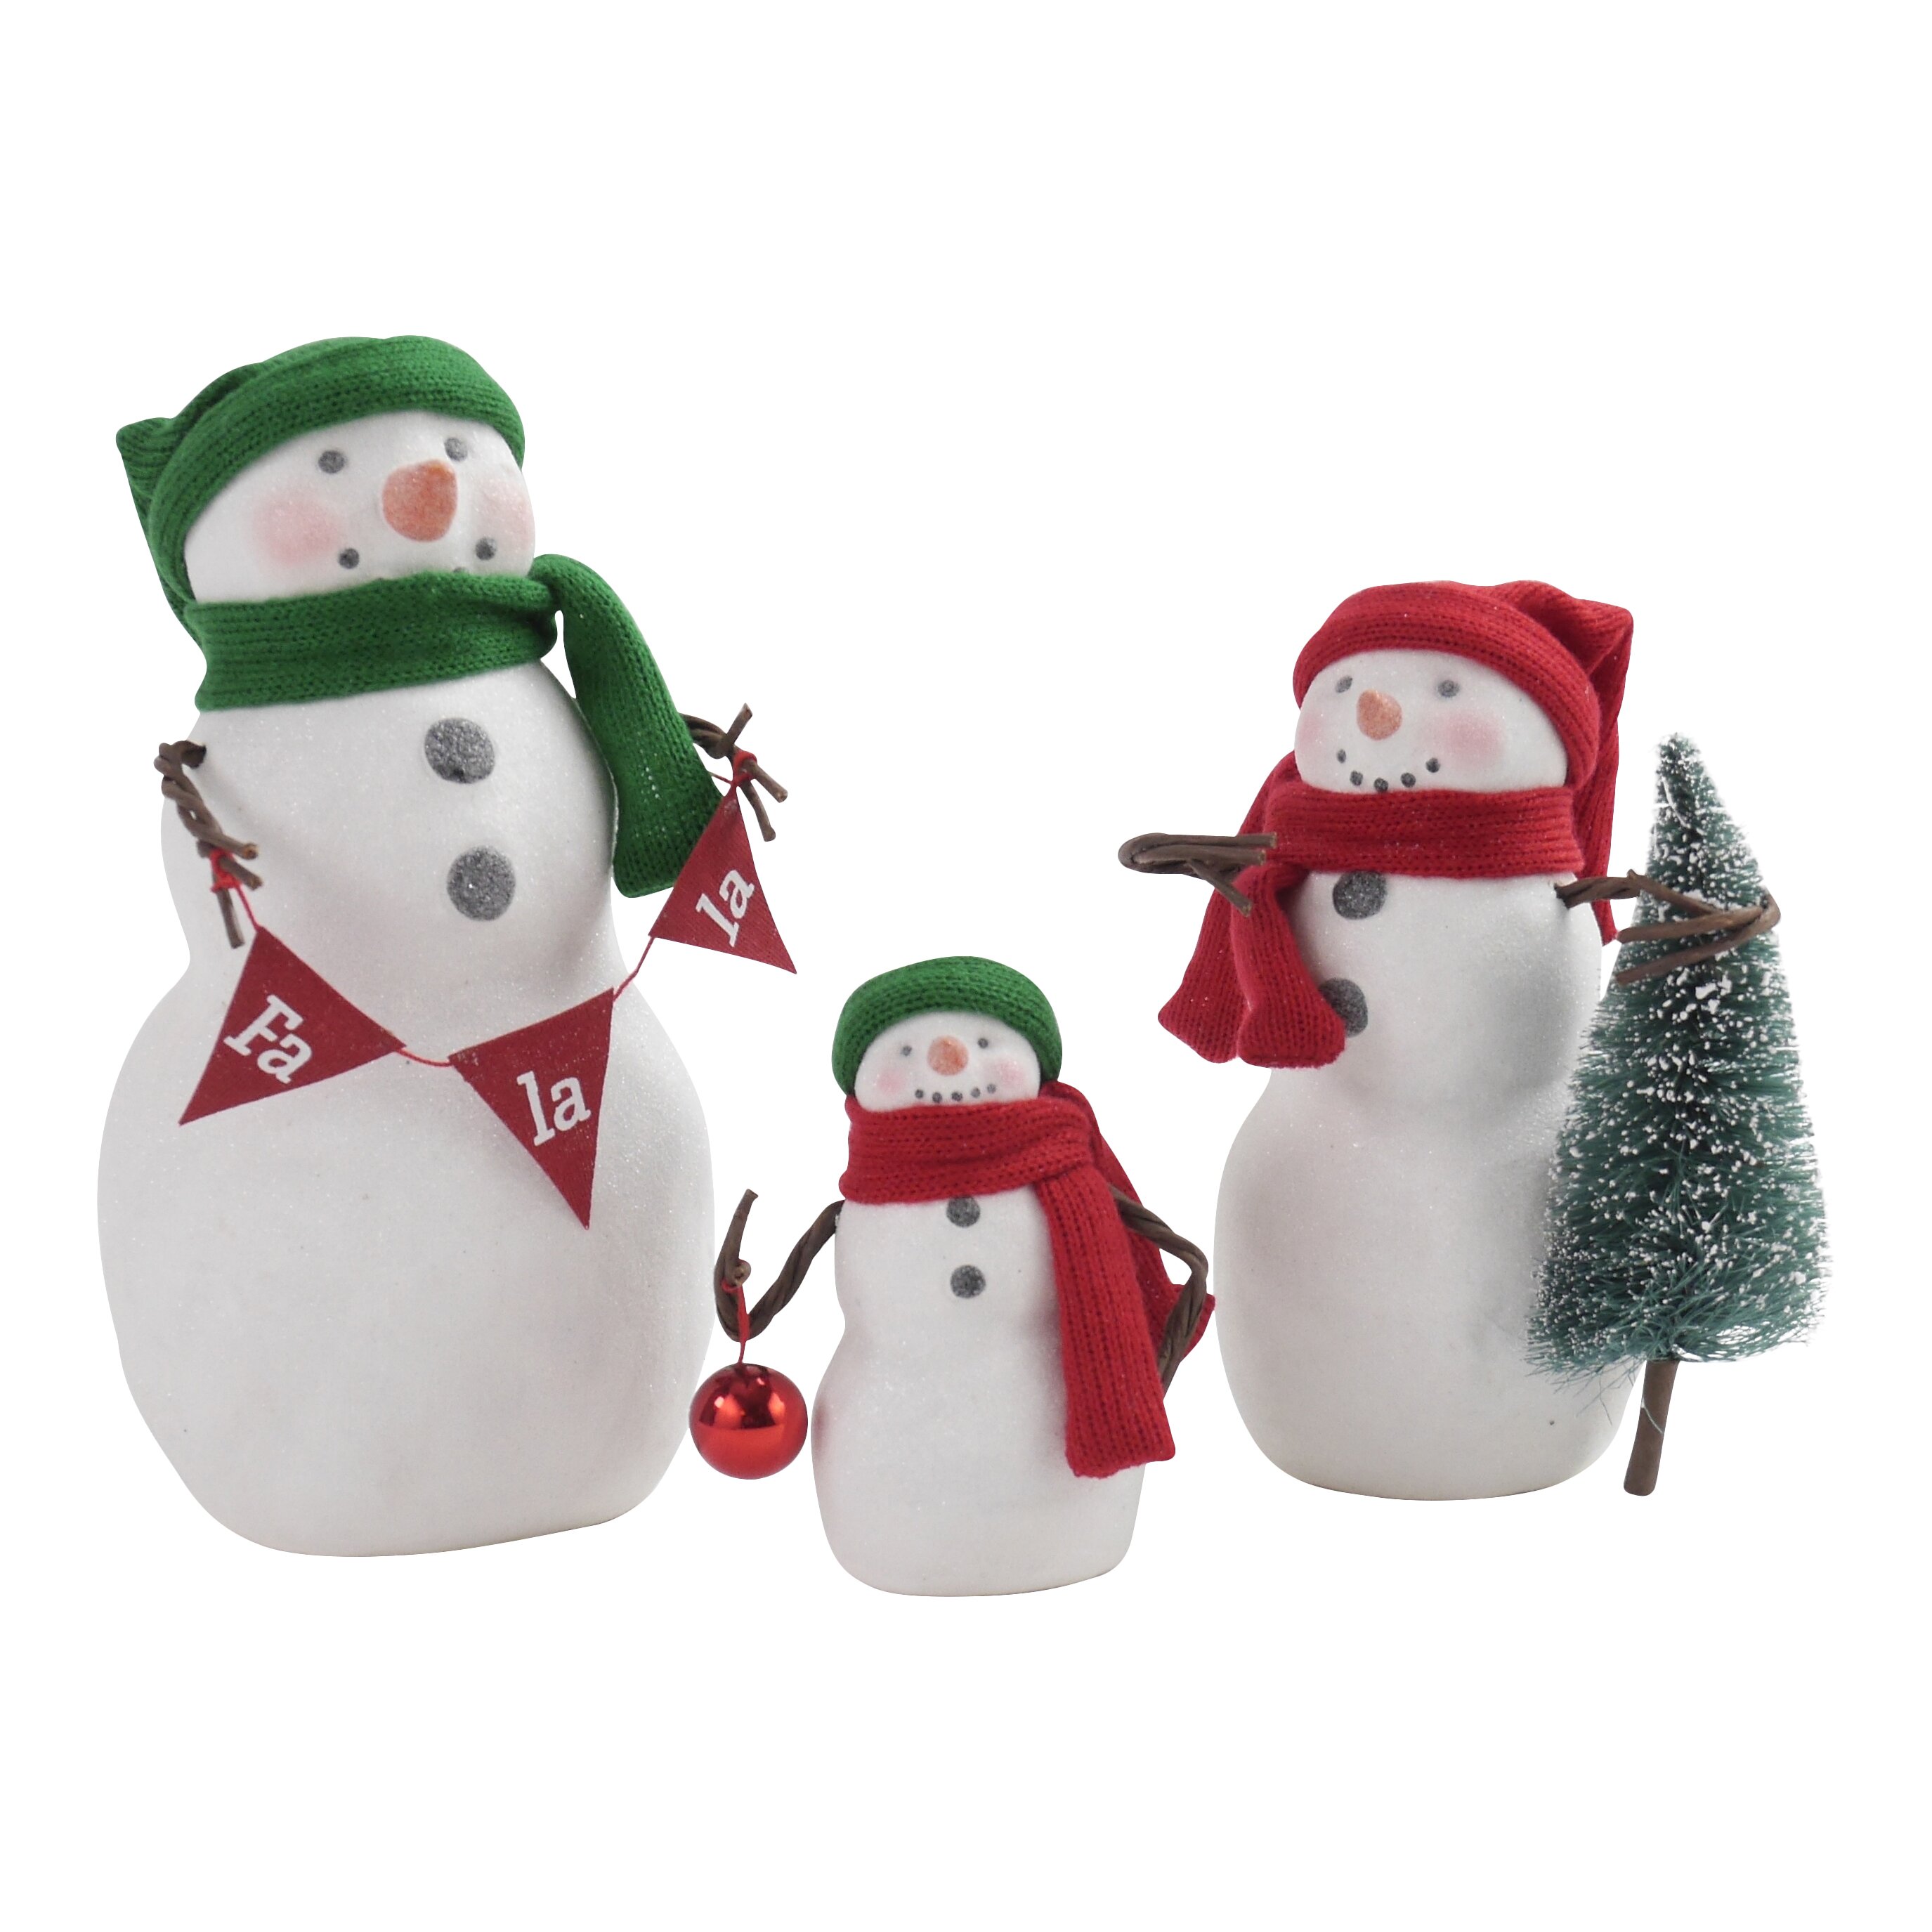 Hallmark Home & Gifts Holiday Snowman Figurine & Reviews | Wayfair